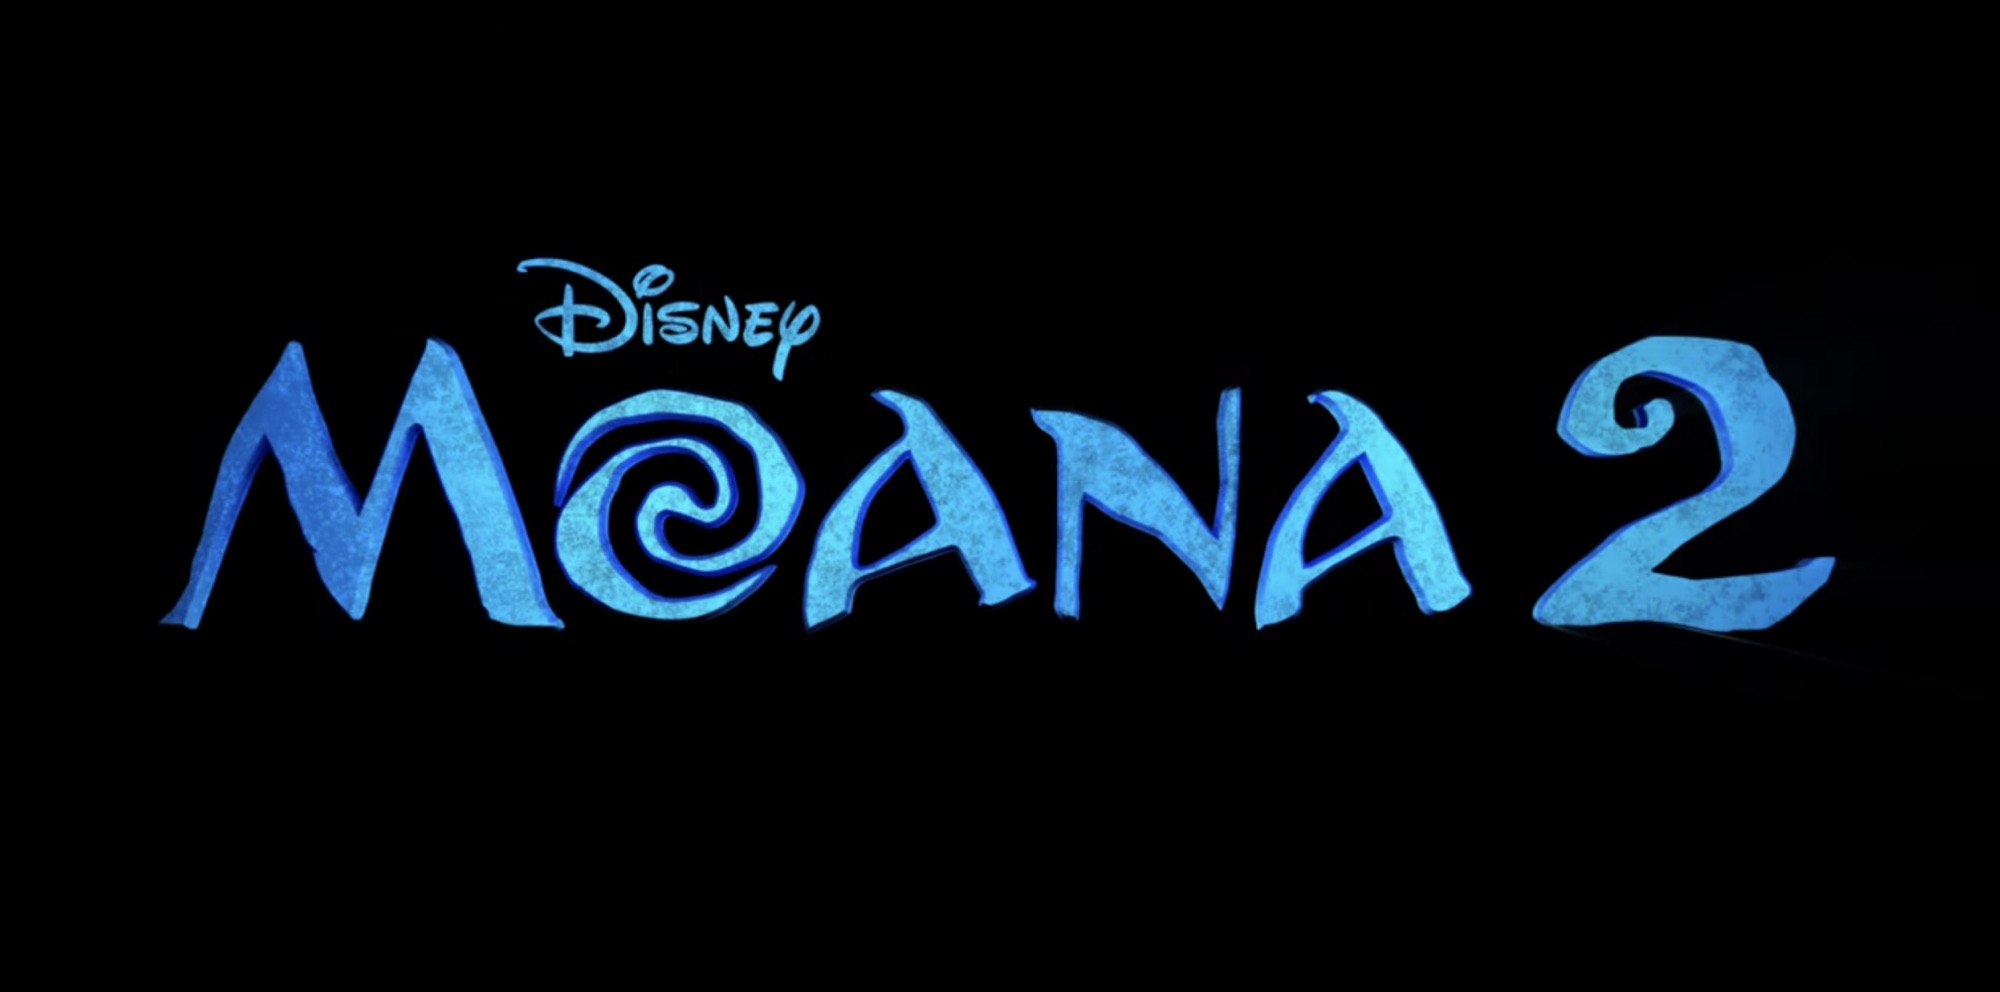 Moana 2 Official Teaser Trailer Released